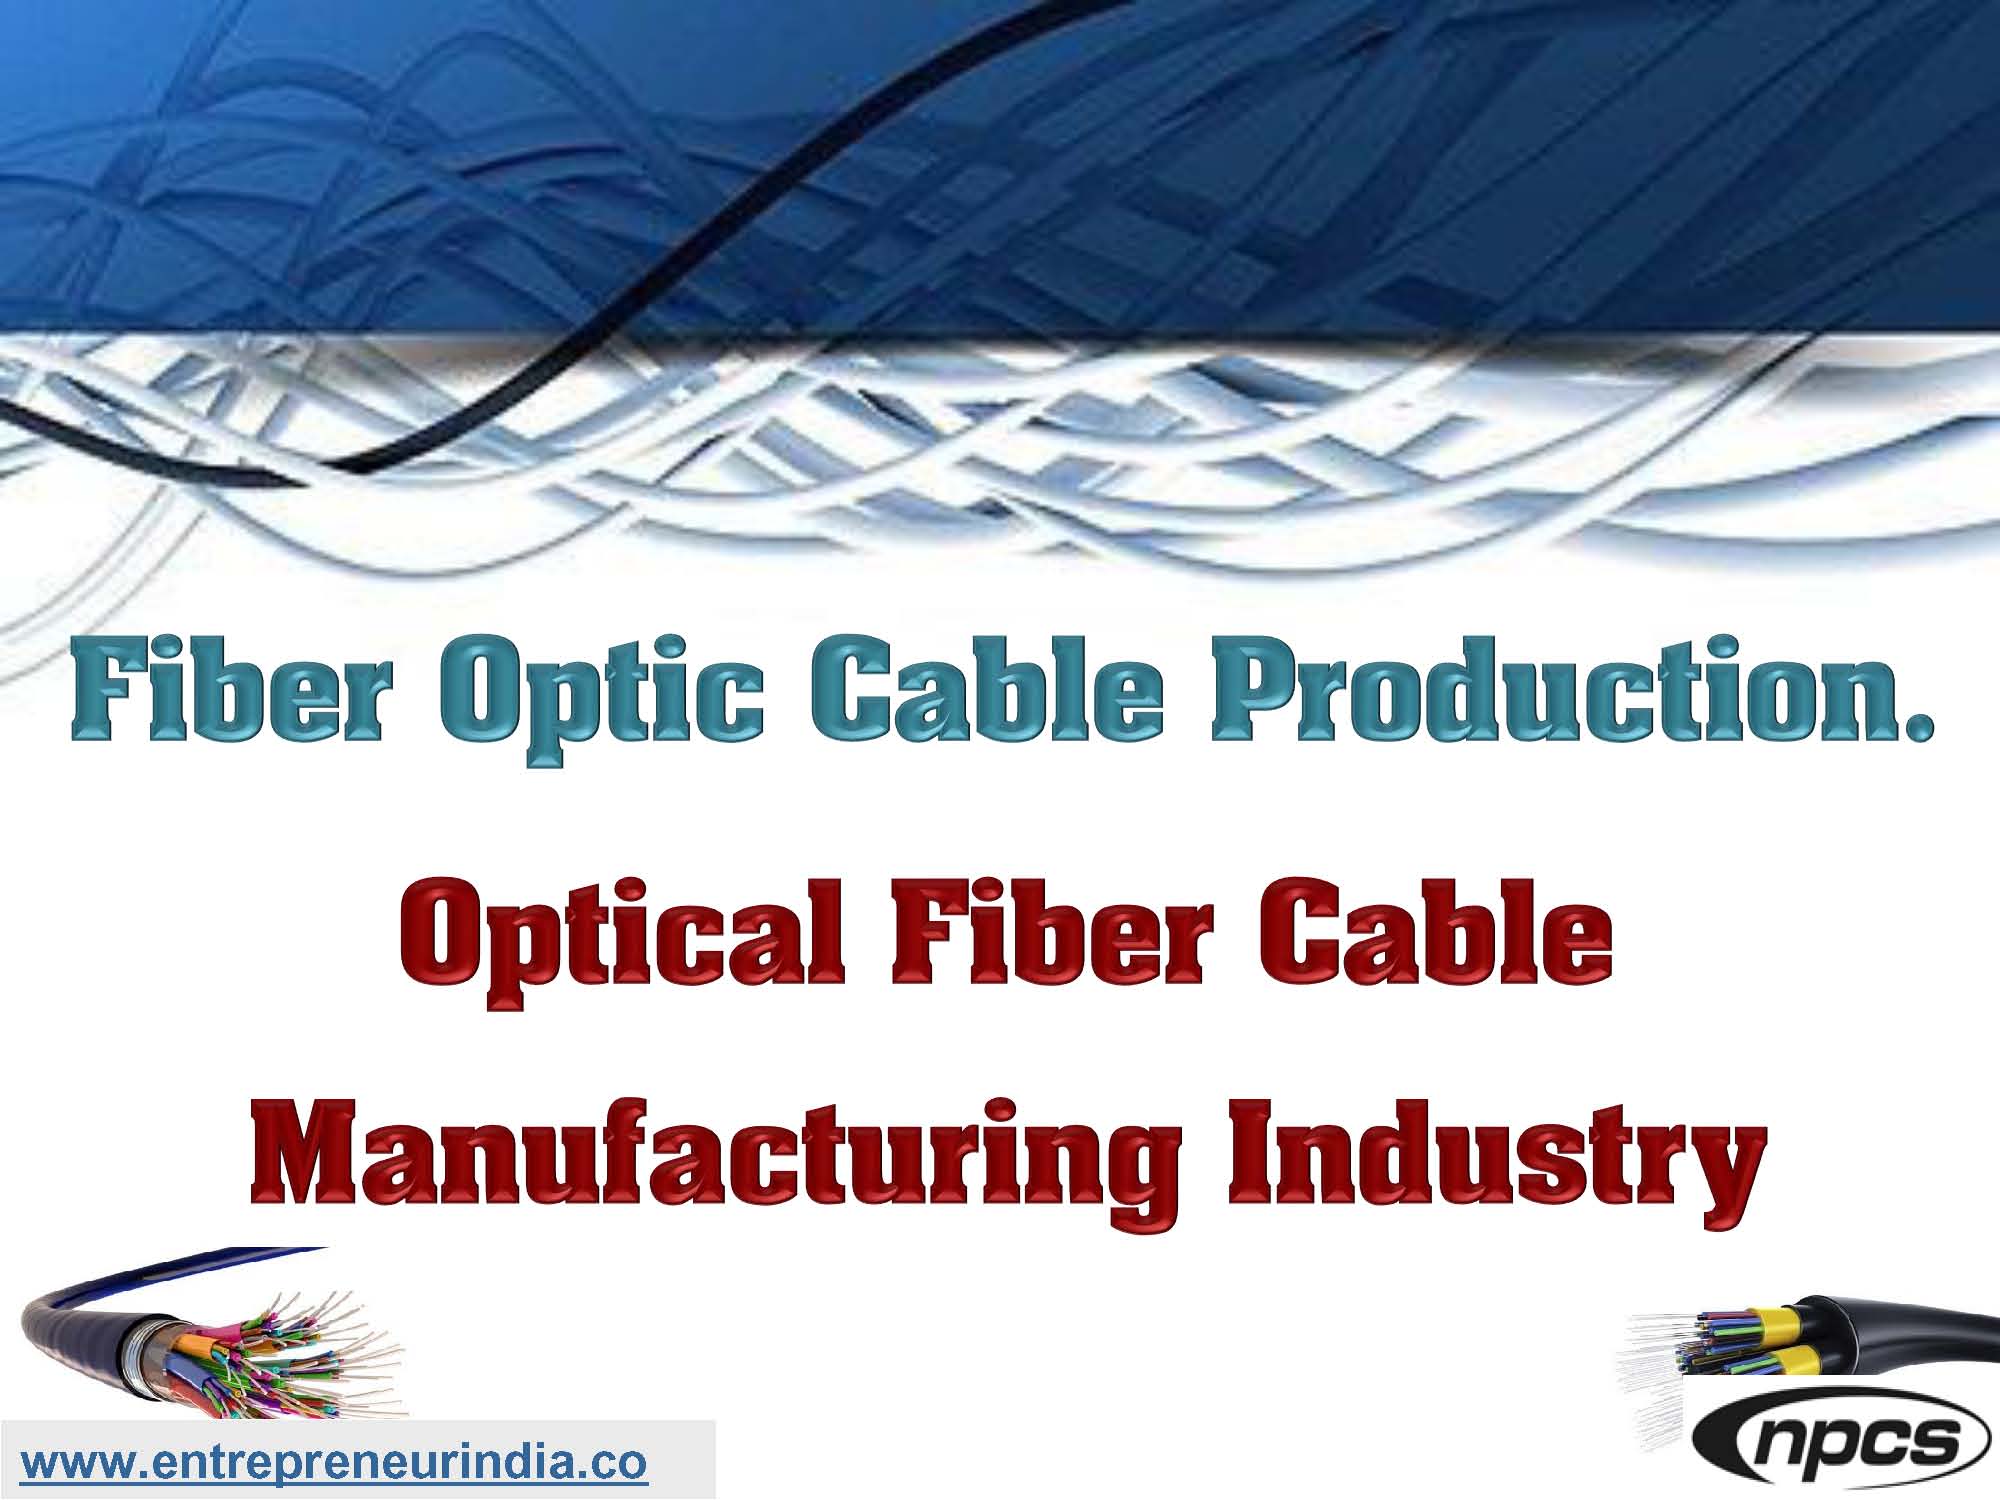 Fiber Optic Cable Production.jpg